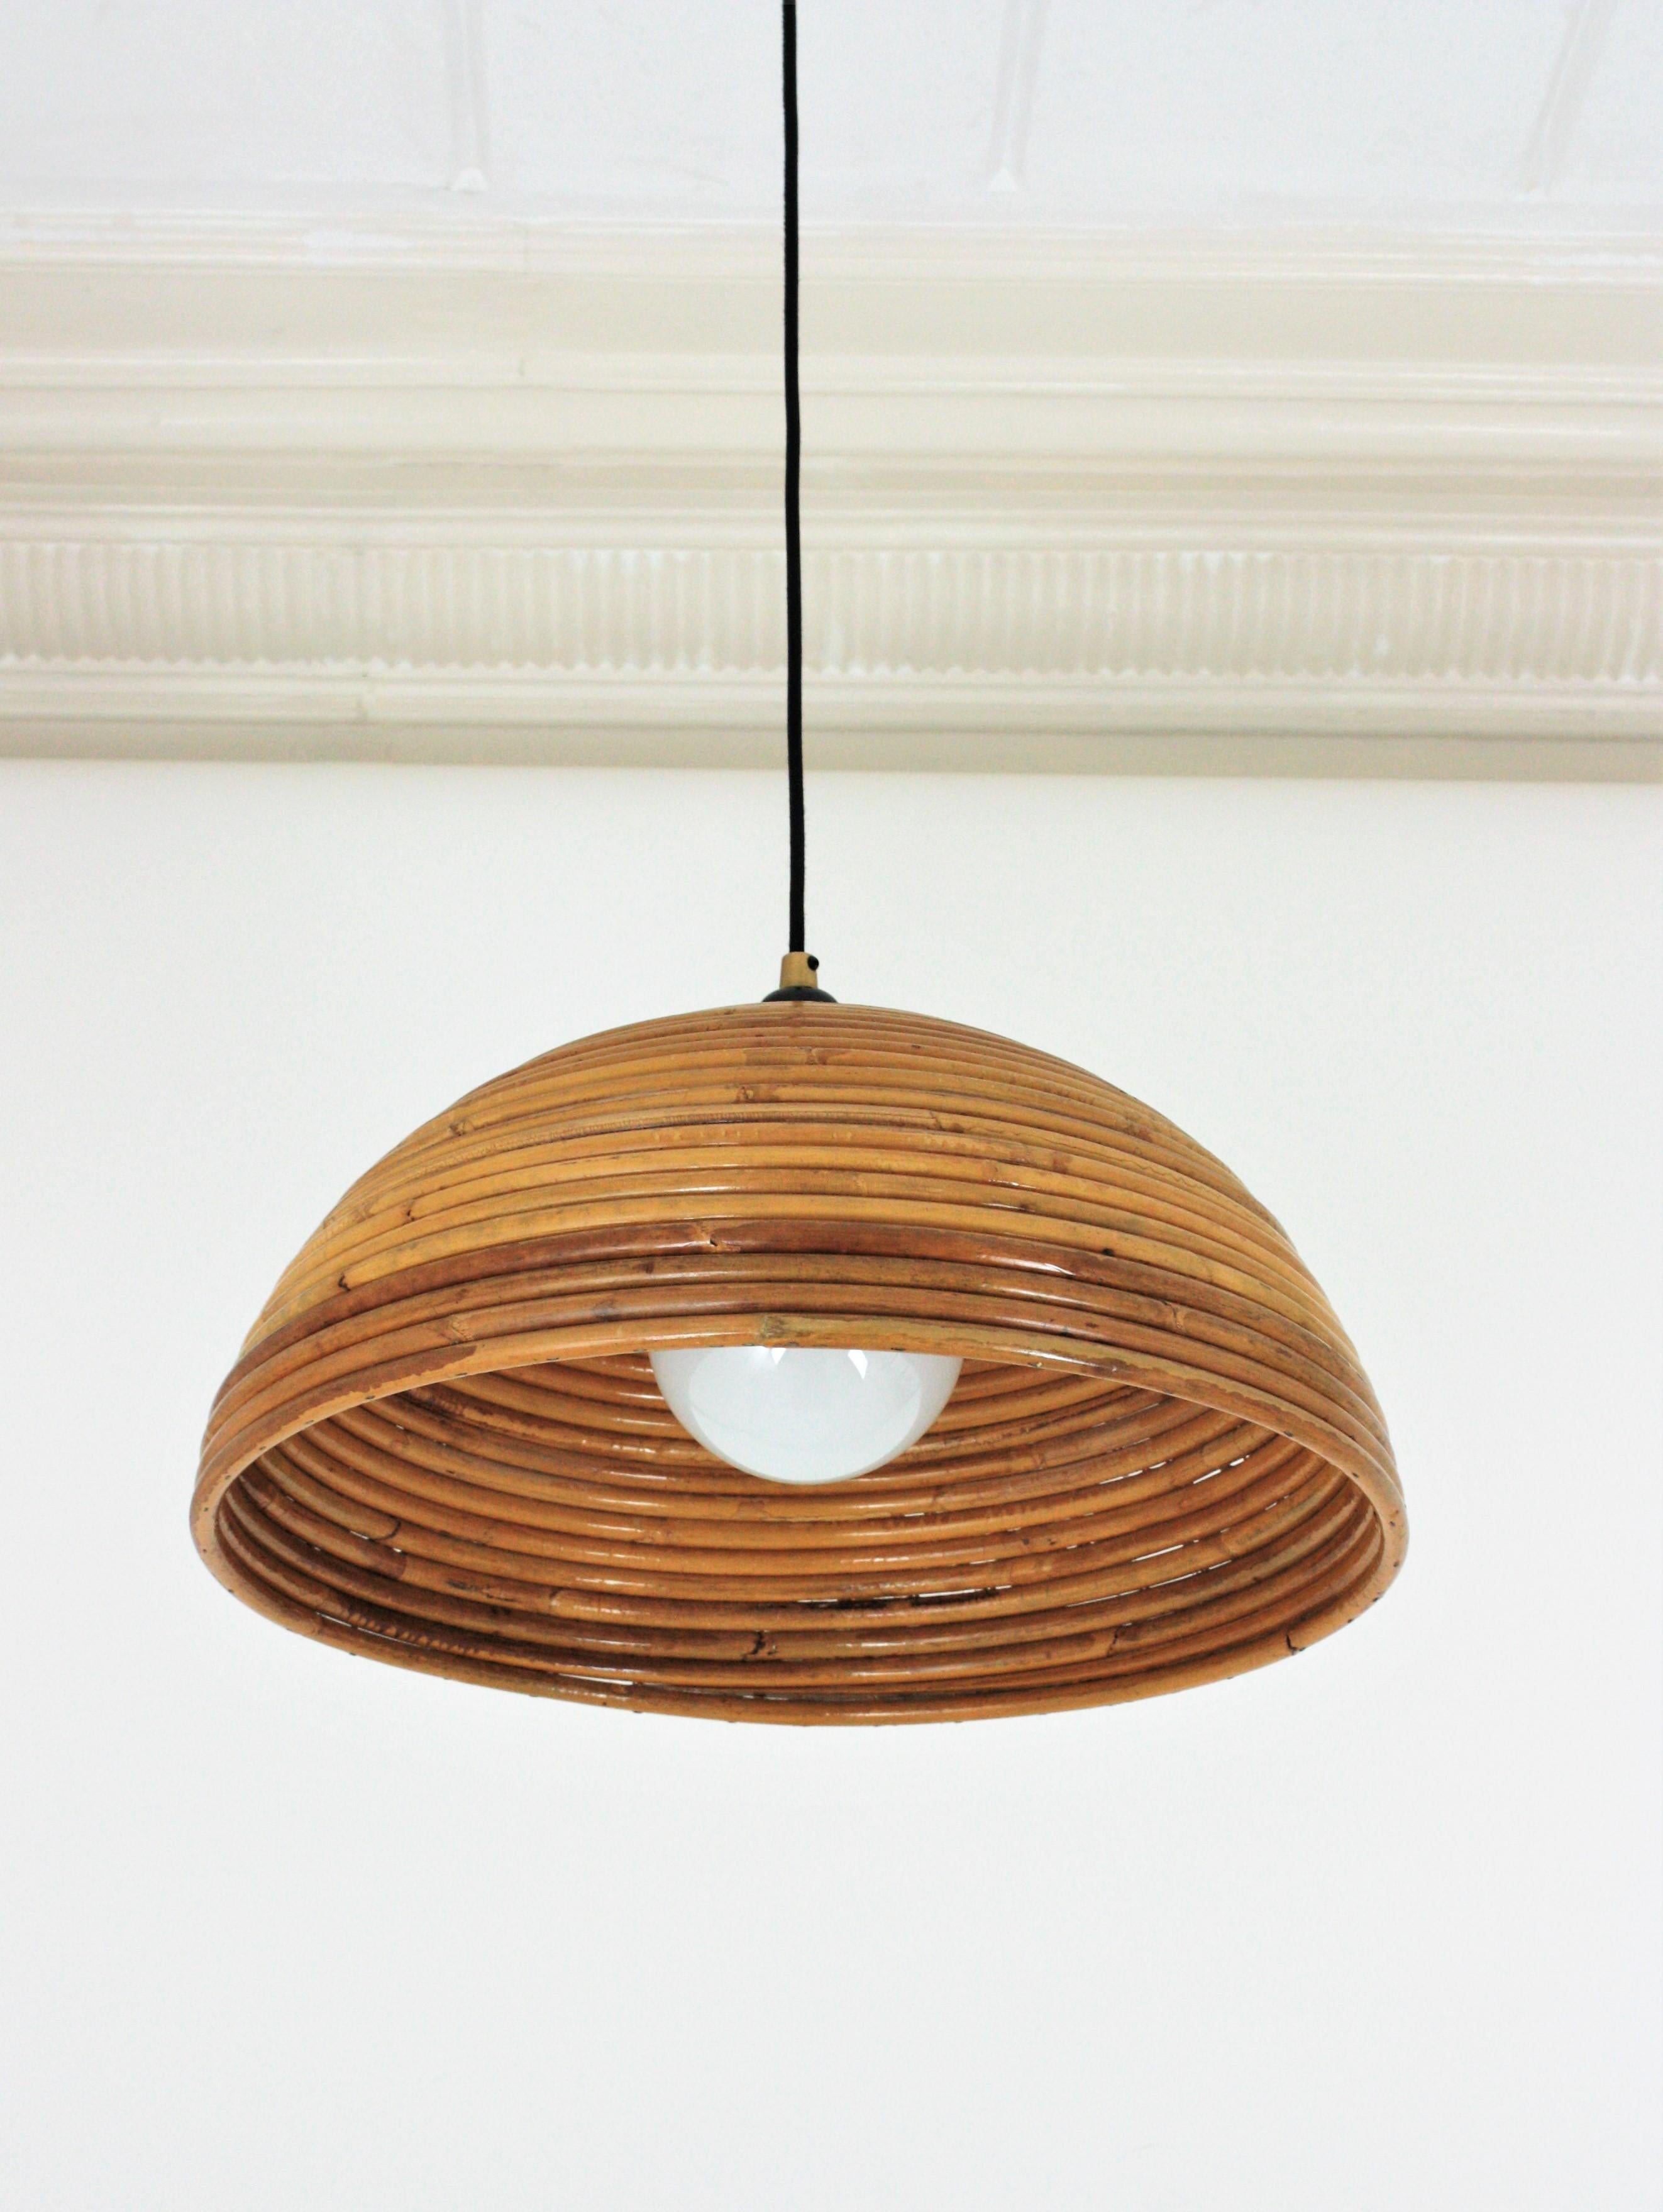 Rattan Dome Shaped Pendant Hanging Light, Gabriella Crespi Style 1